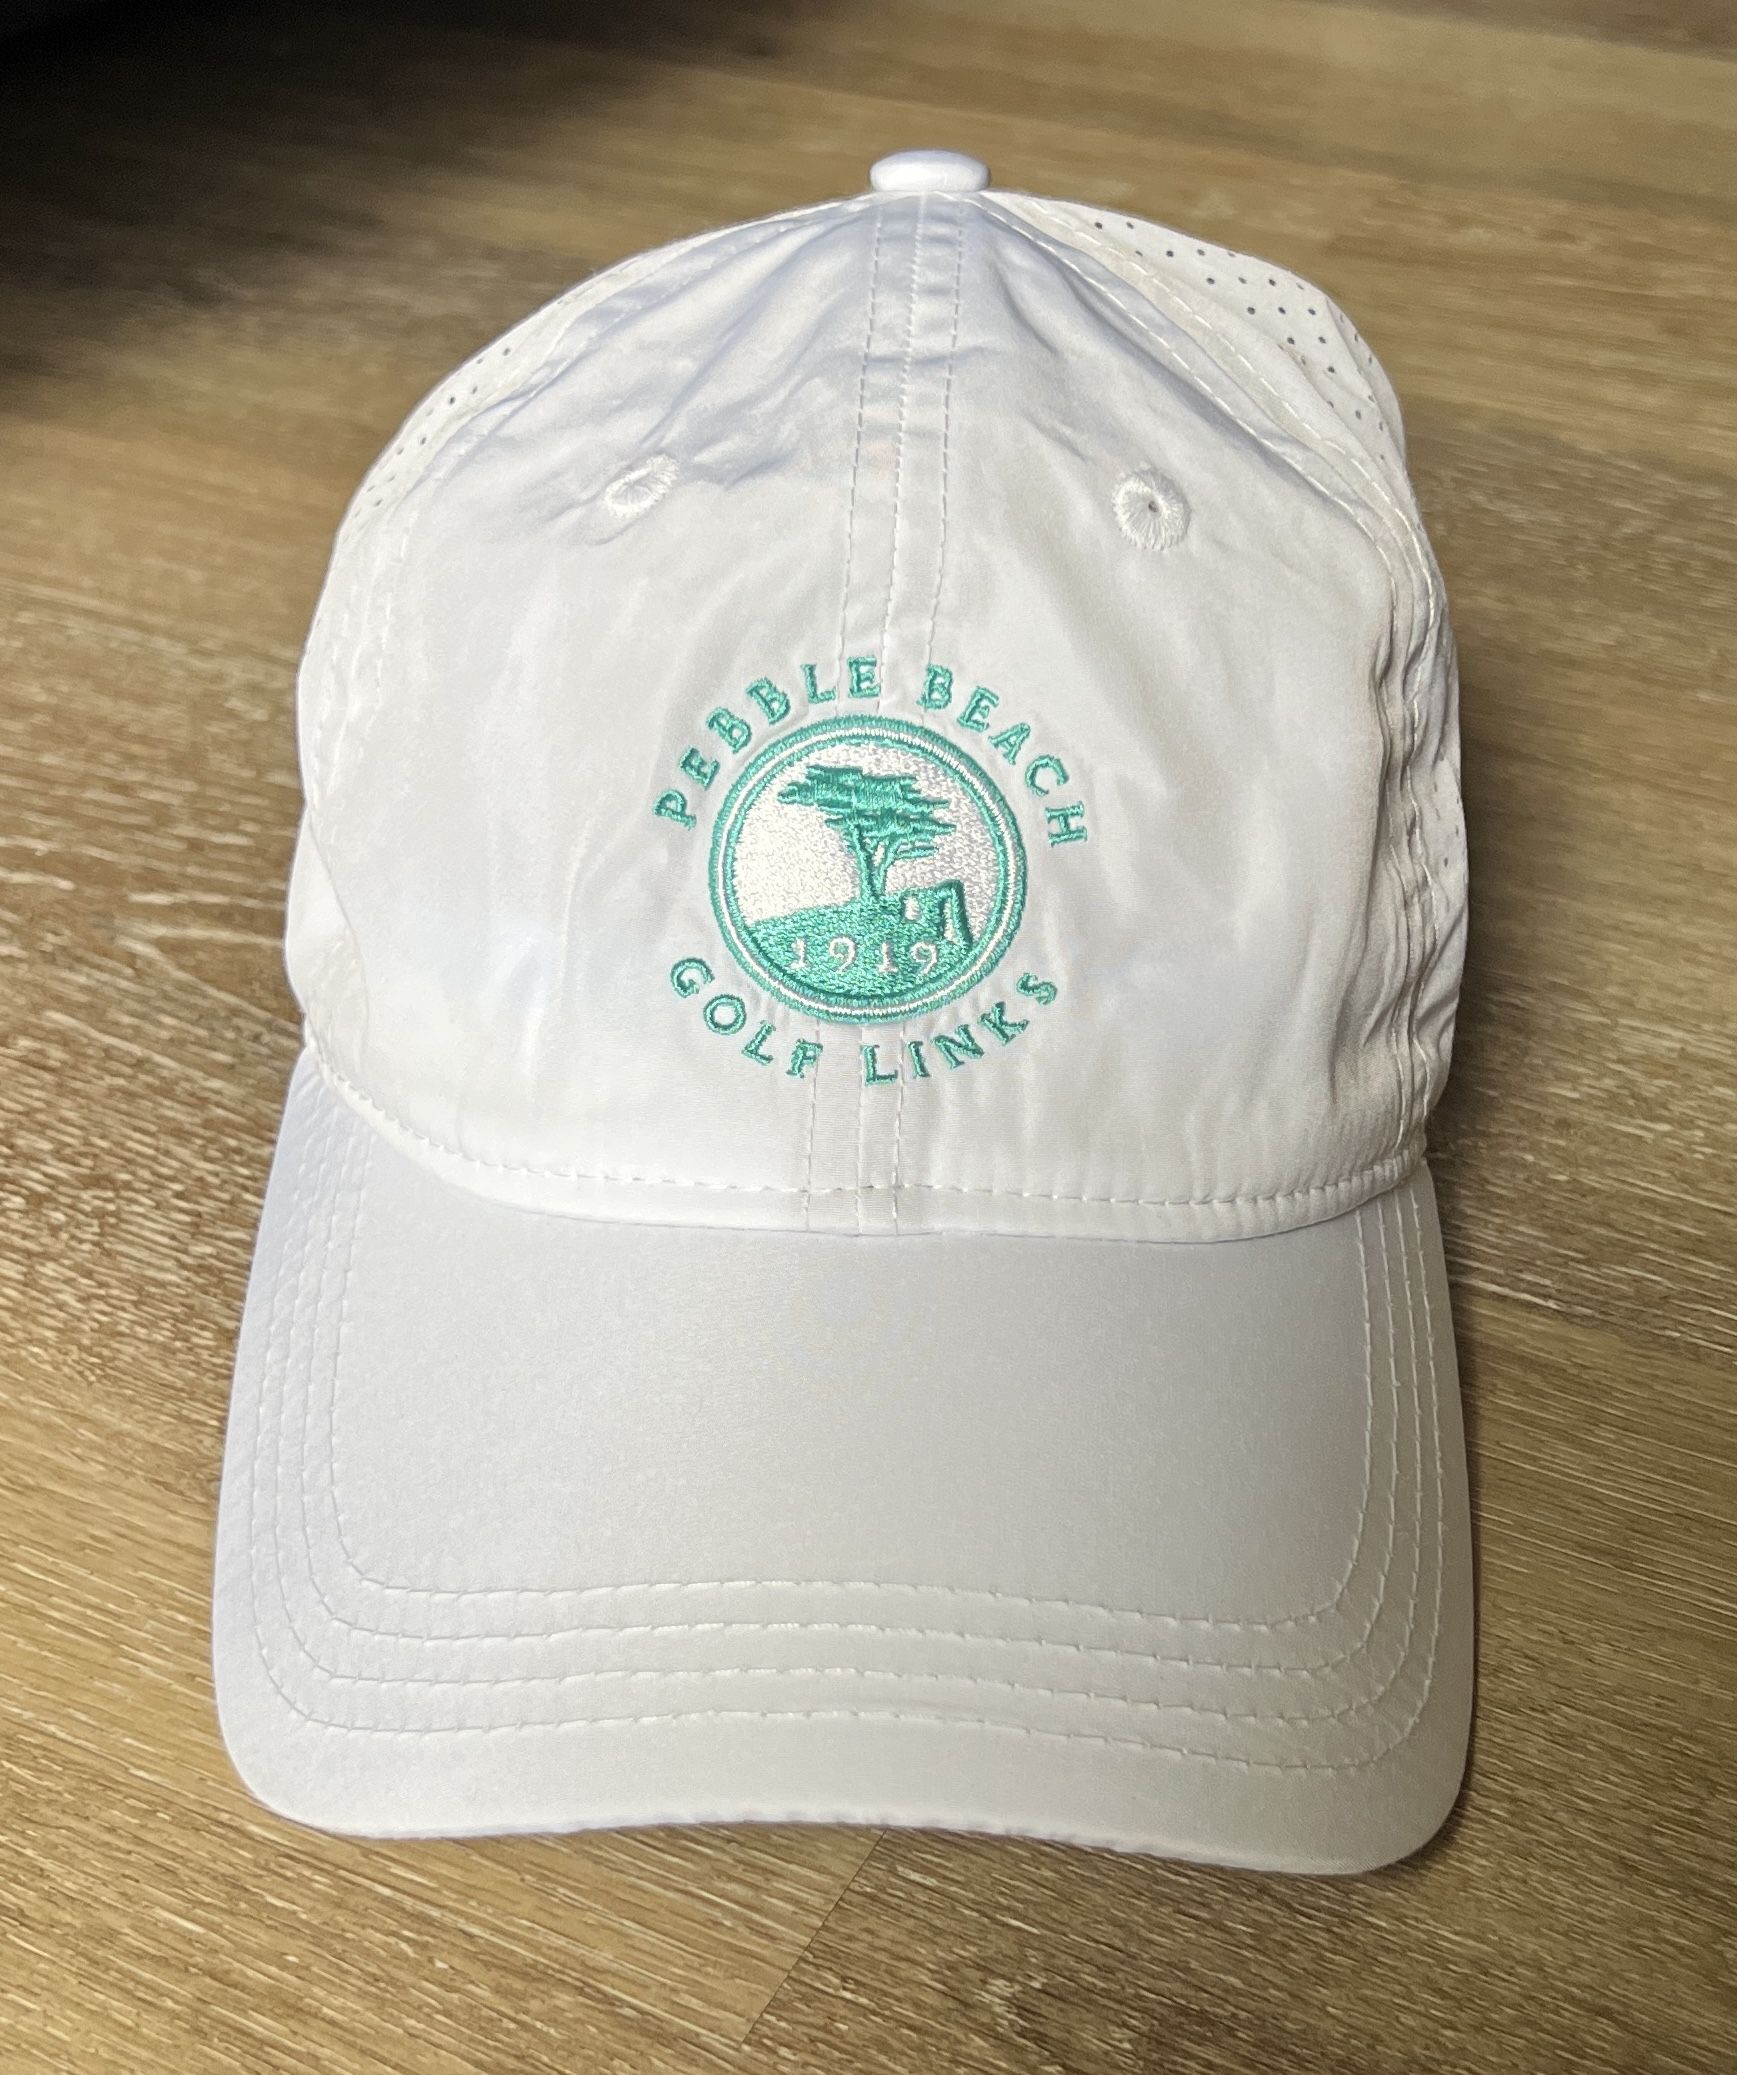 NEW ERA GOLF Pebble Beach Golf Links 1919 White Adjustable Hat Cap  